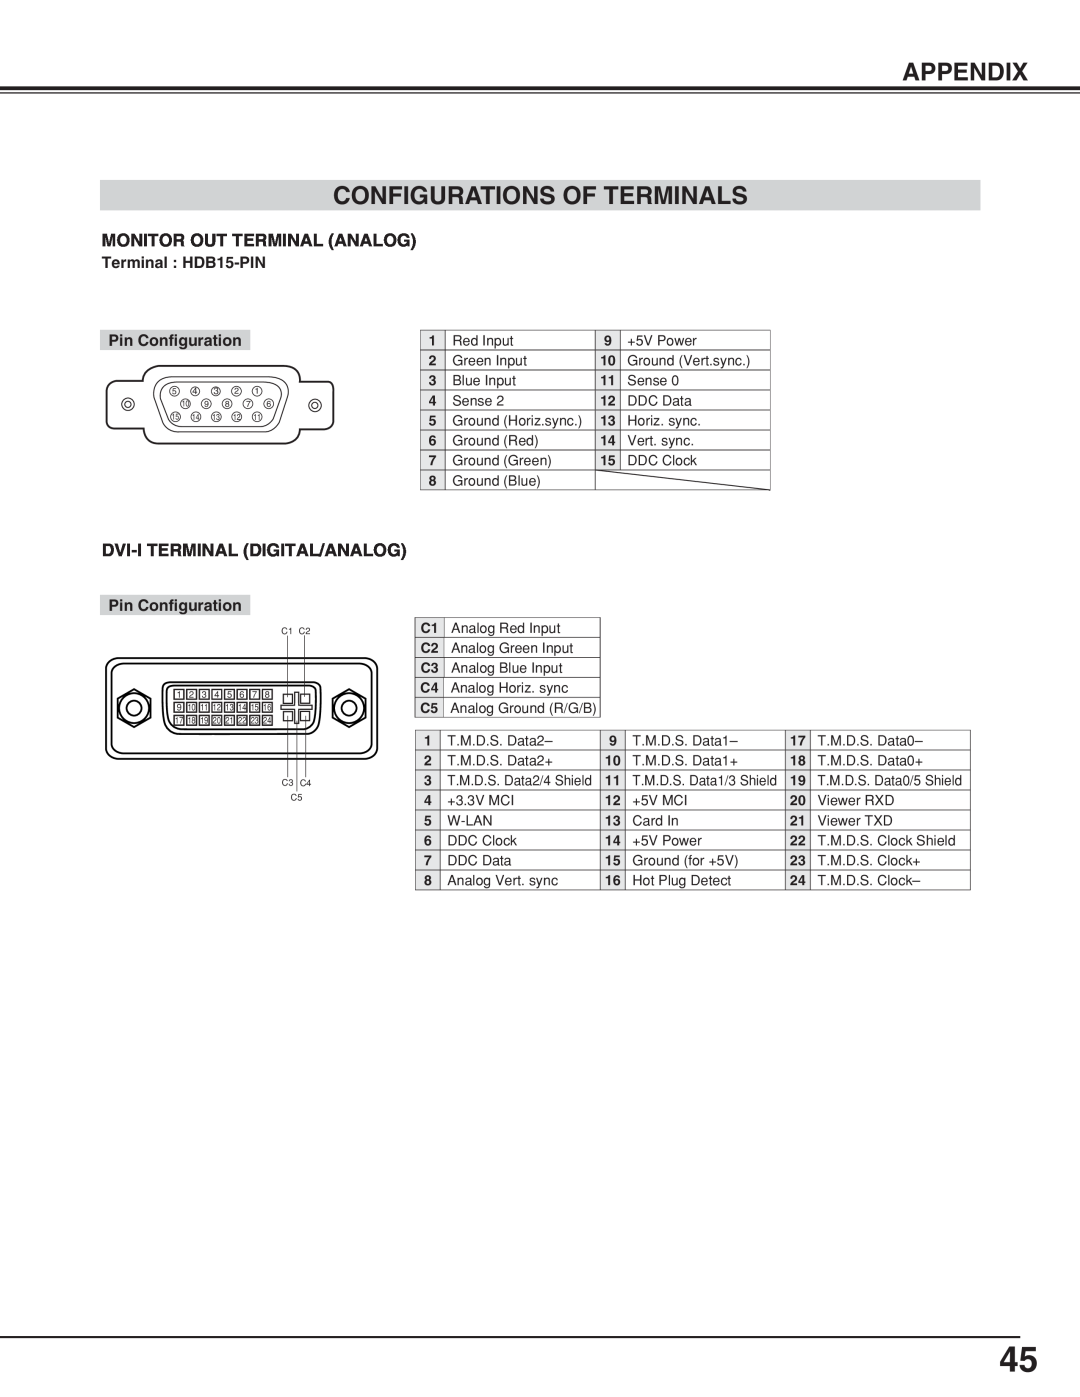 Eiki LC-XNB5M owner manual Appendix Configurations Of Terminals, Monitor Out Terminal Analog, Dvi-I Terminal Digital/Analog 